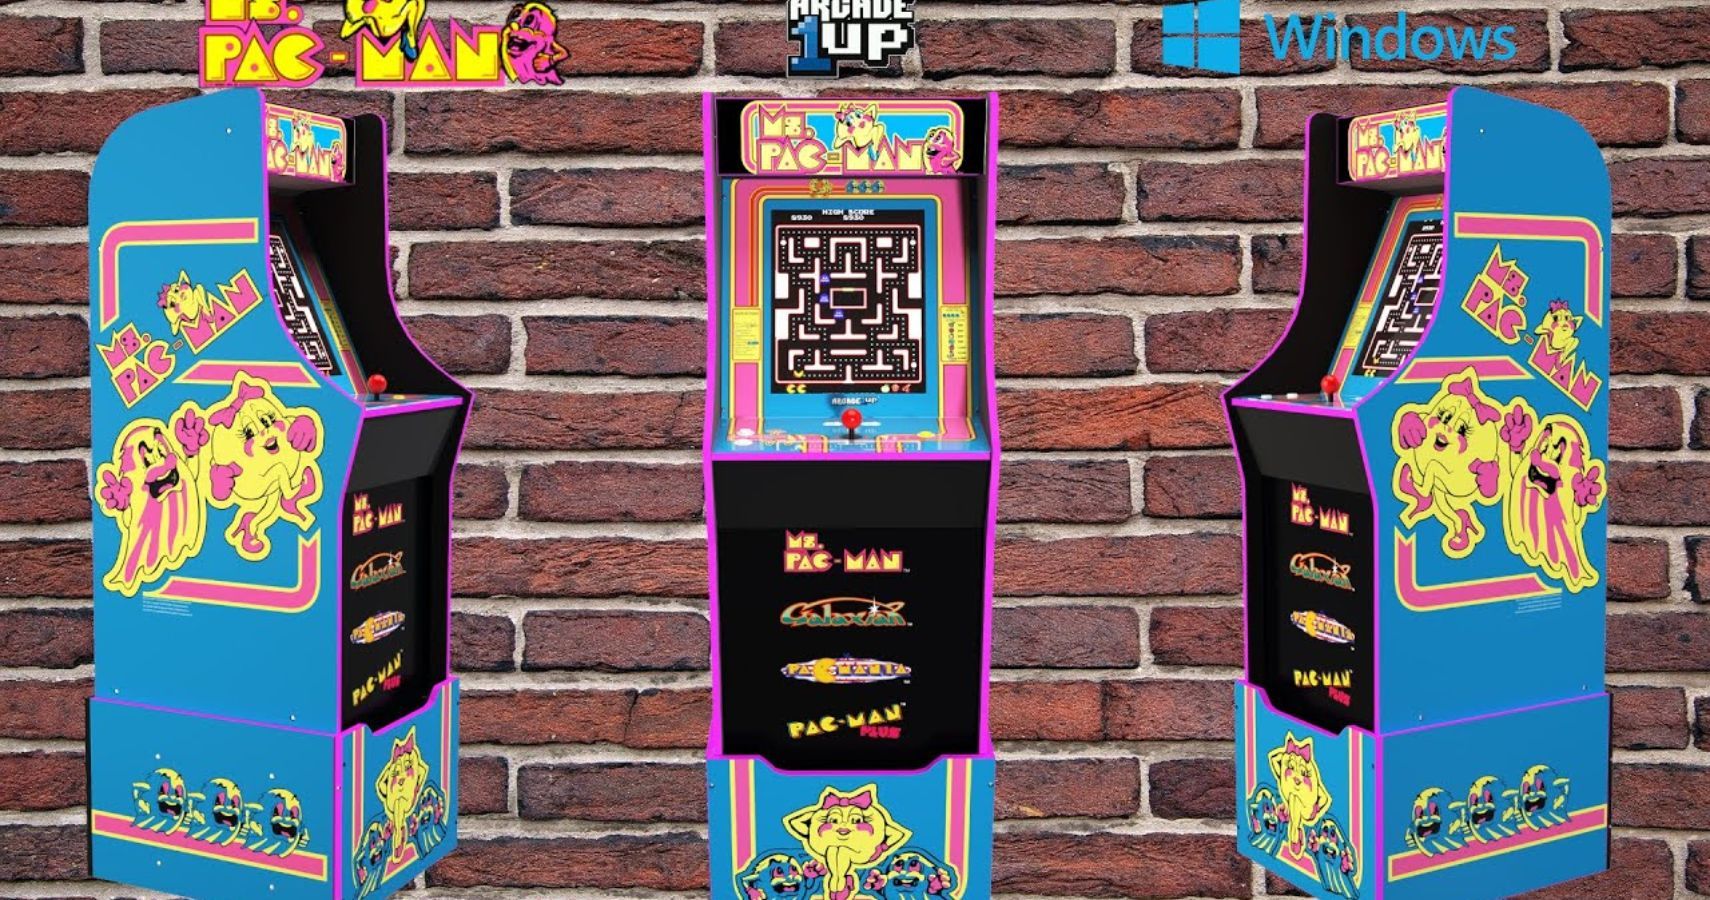 arcade1up partycade ms pac man